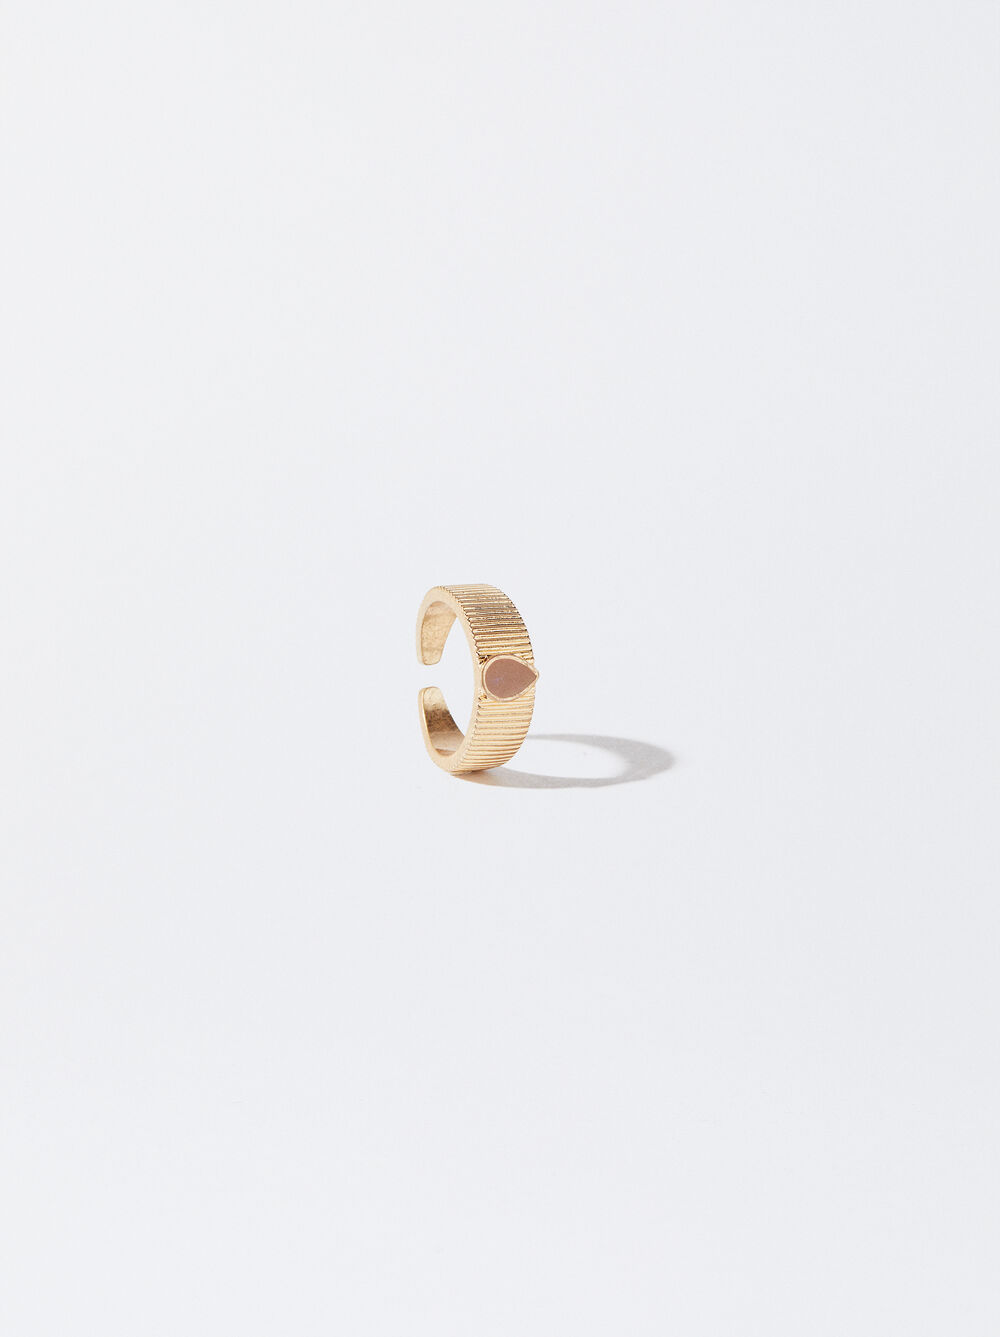 Goldener Ring Mit Emaille